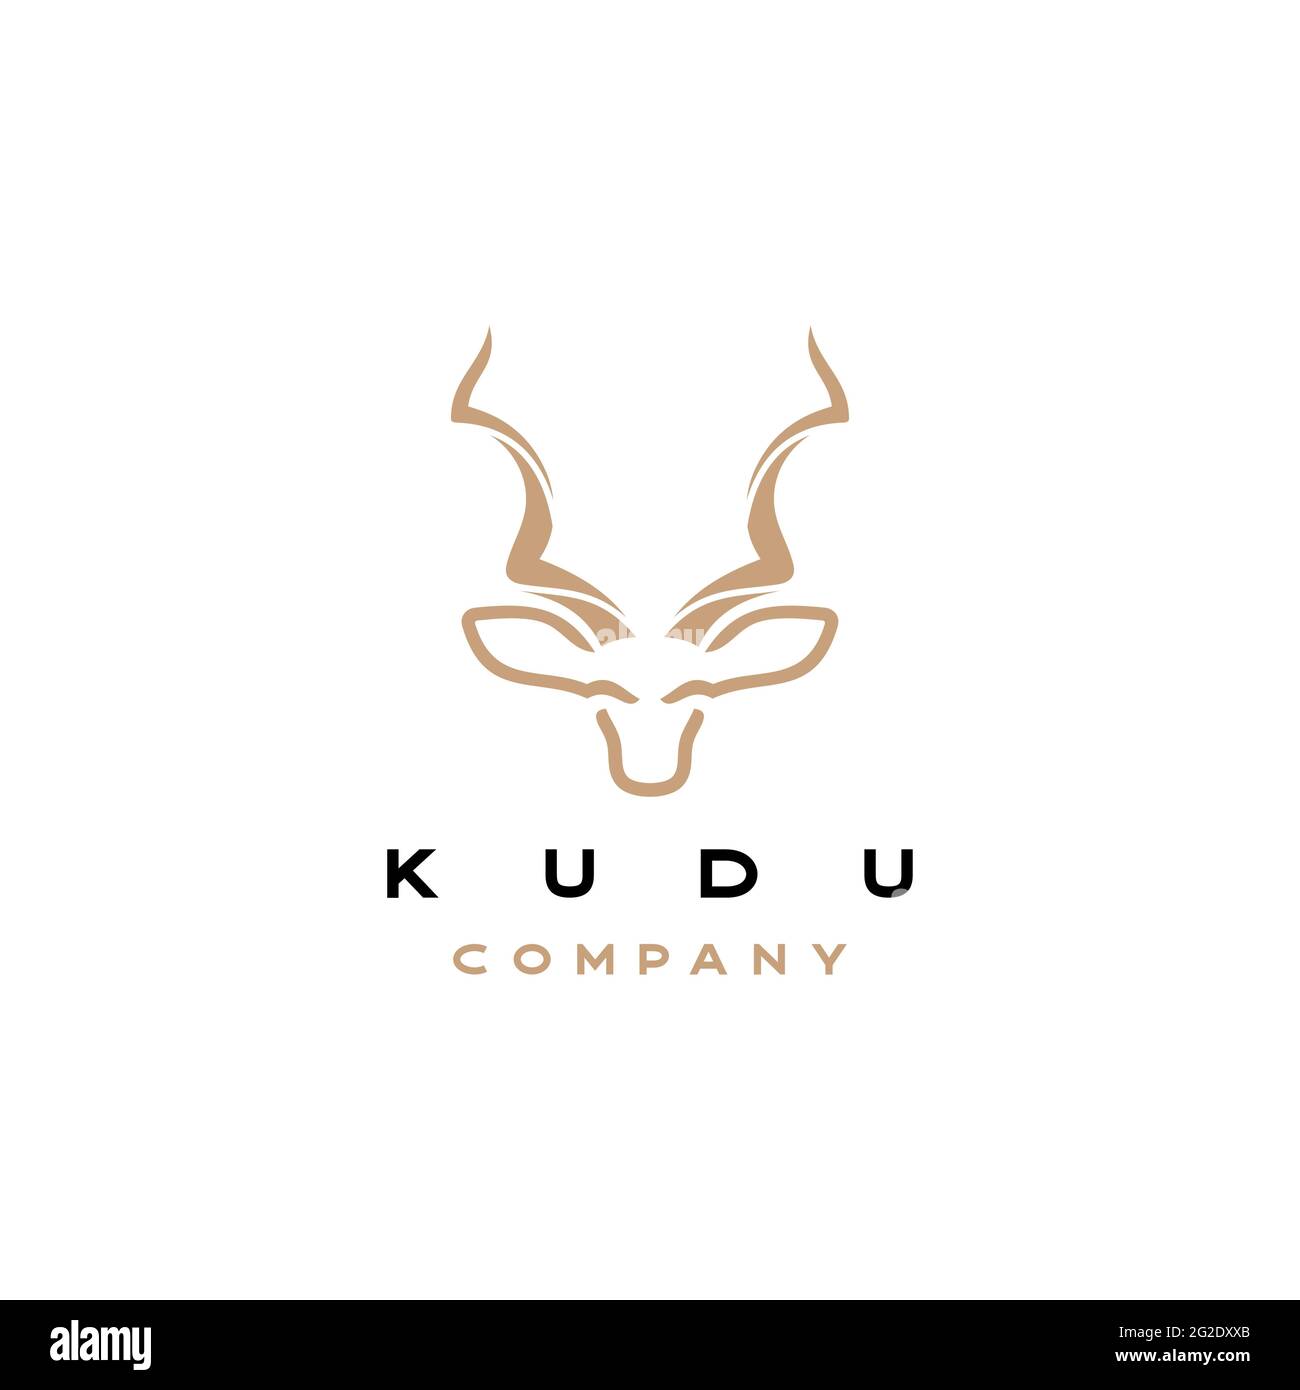 Kudu line art logo design vector Stock Vector